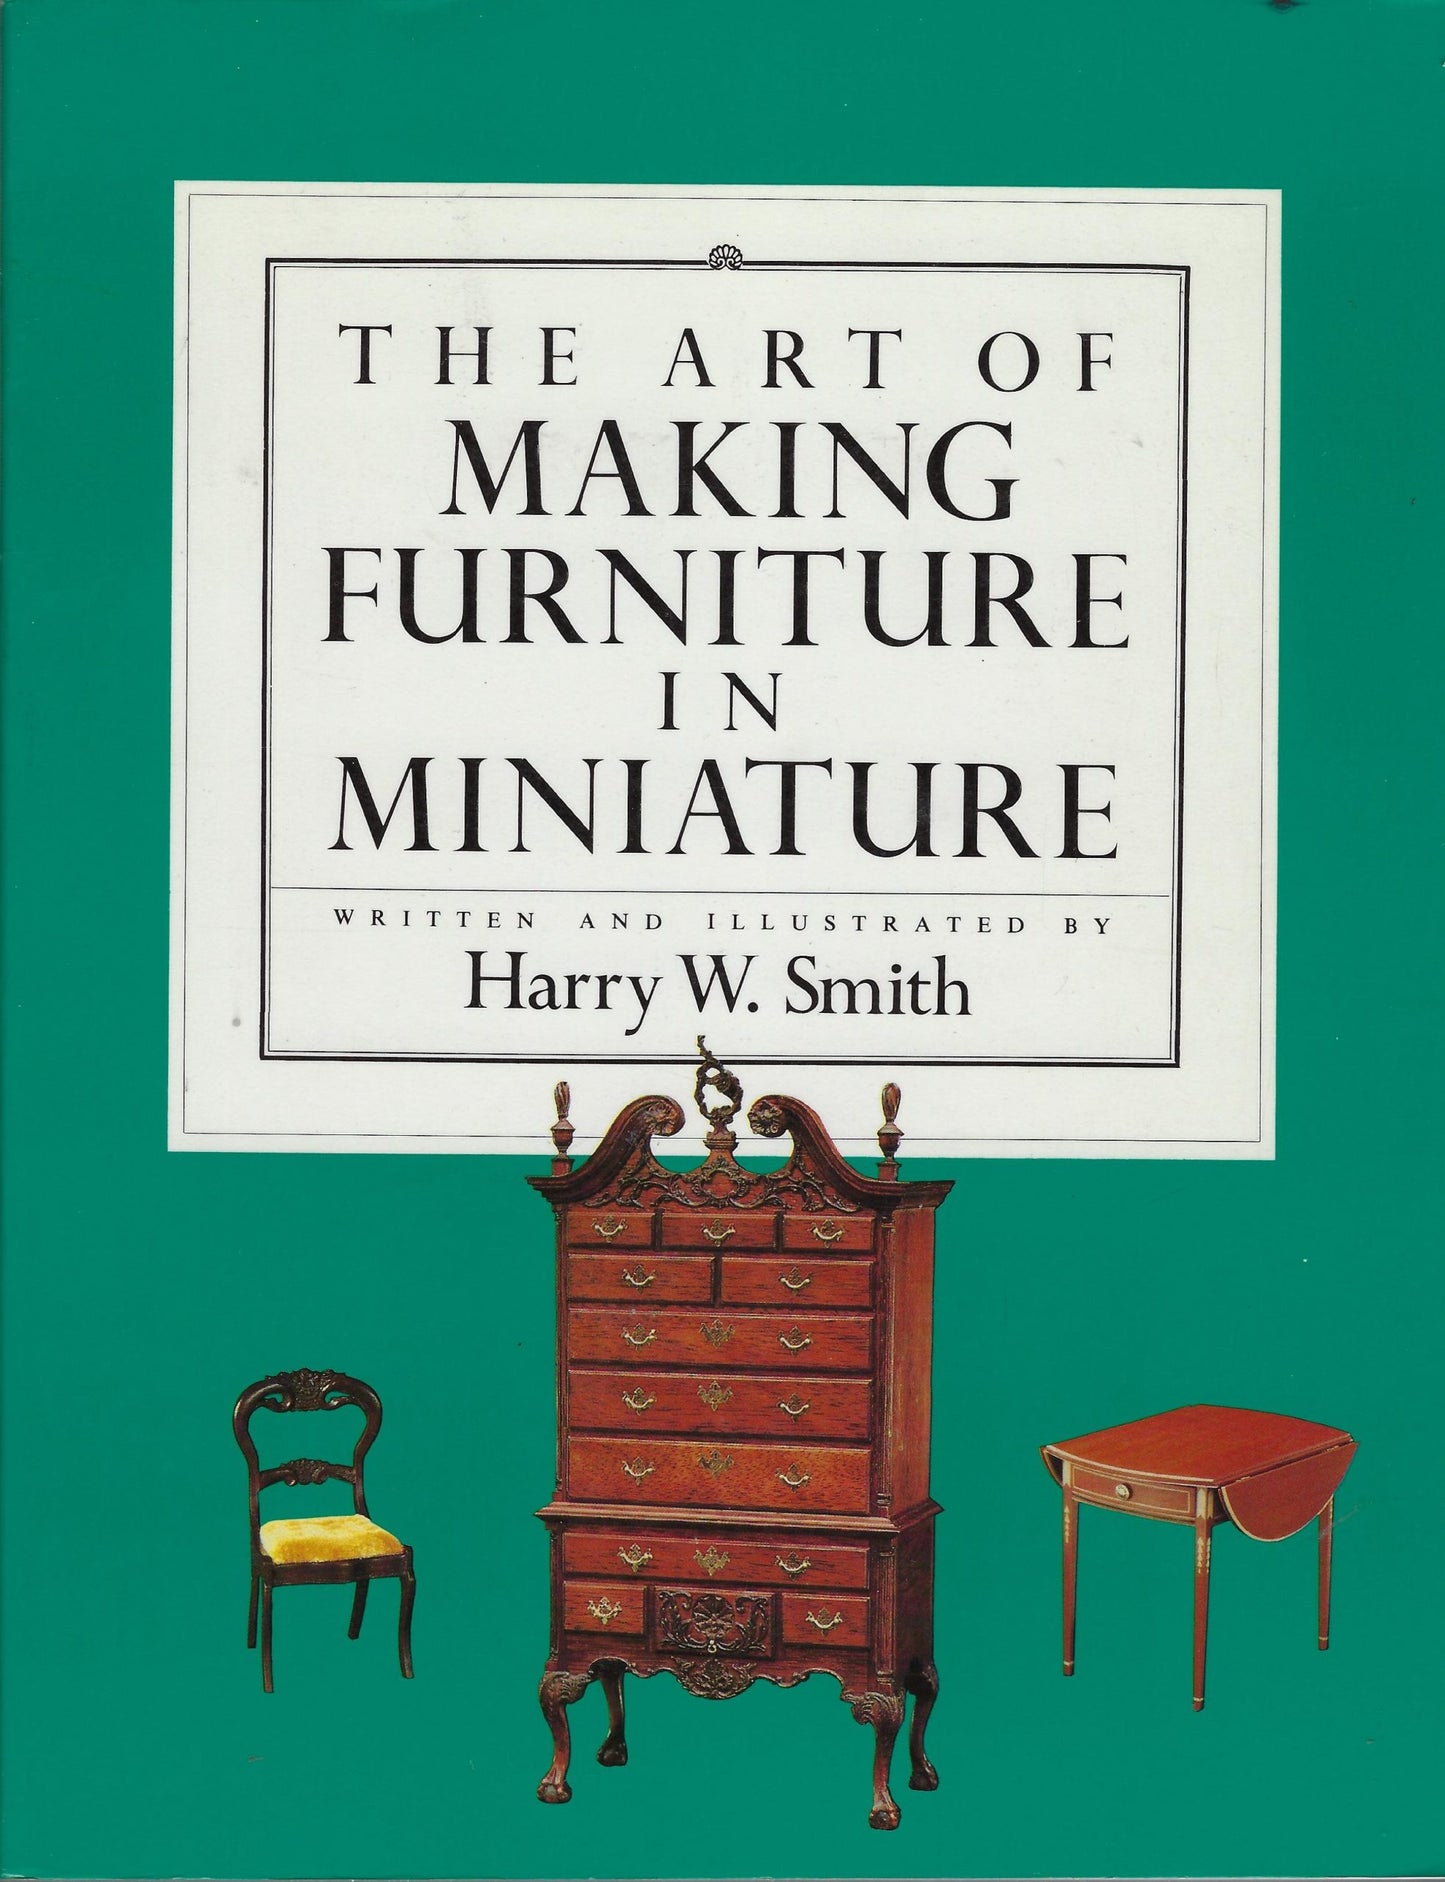 The art of making furniture in miniature